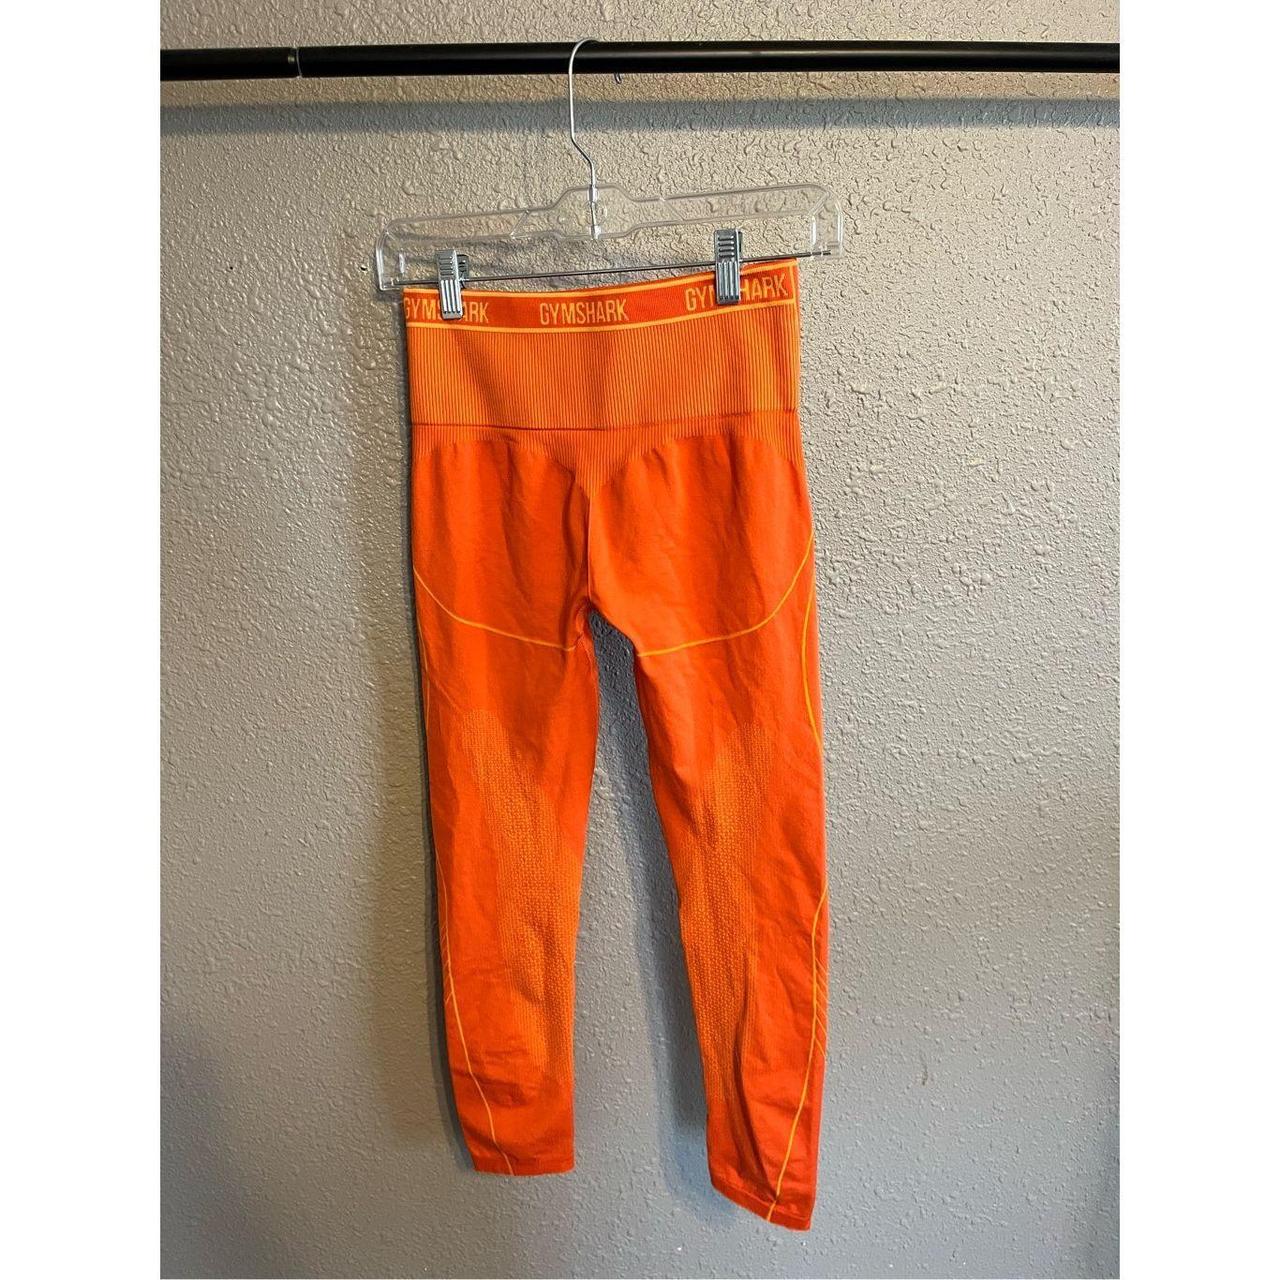 Gymshark ultra seamless leggings - orange. Size - Depop